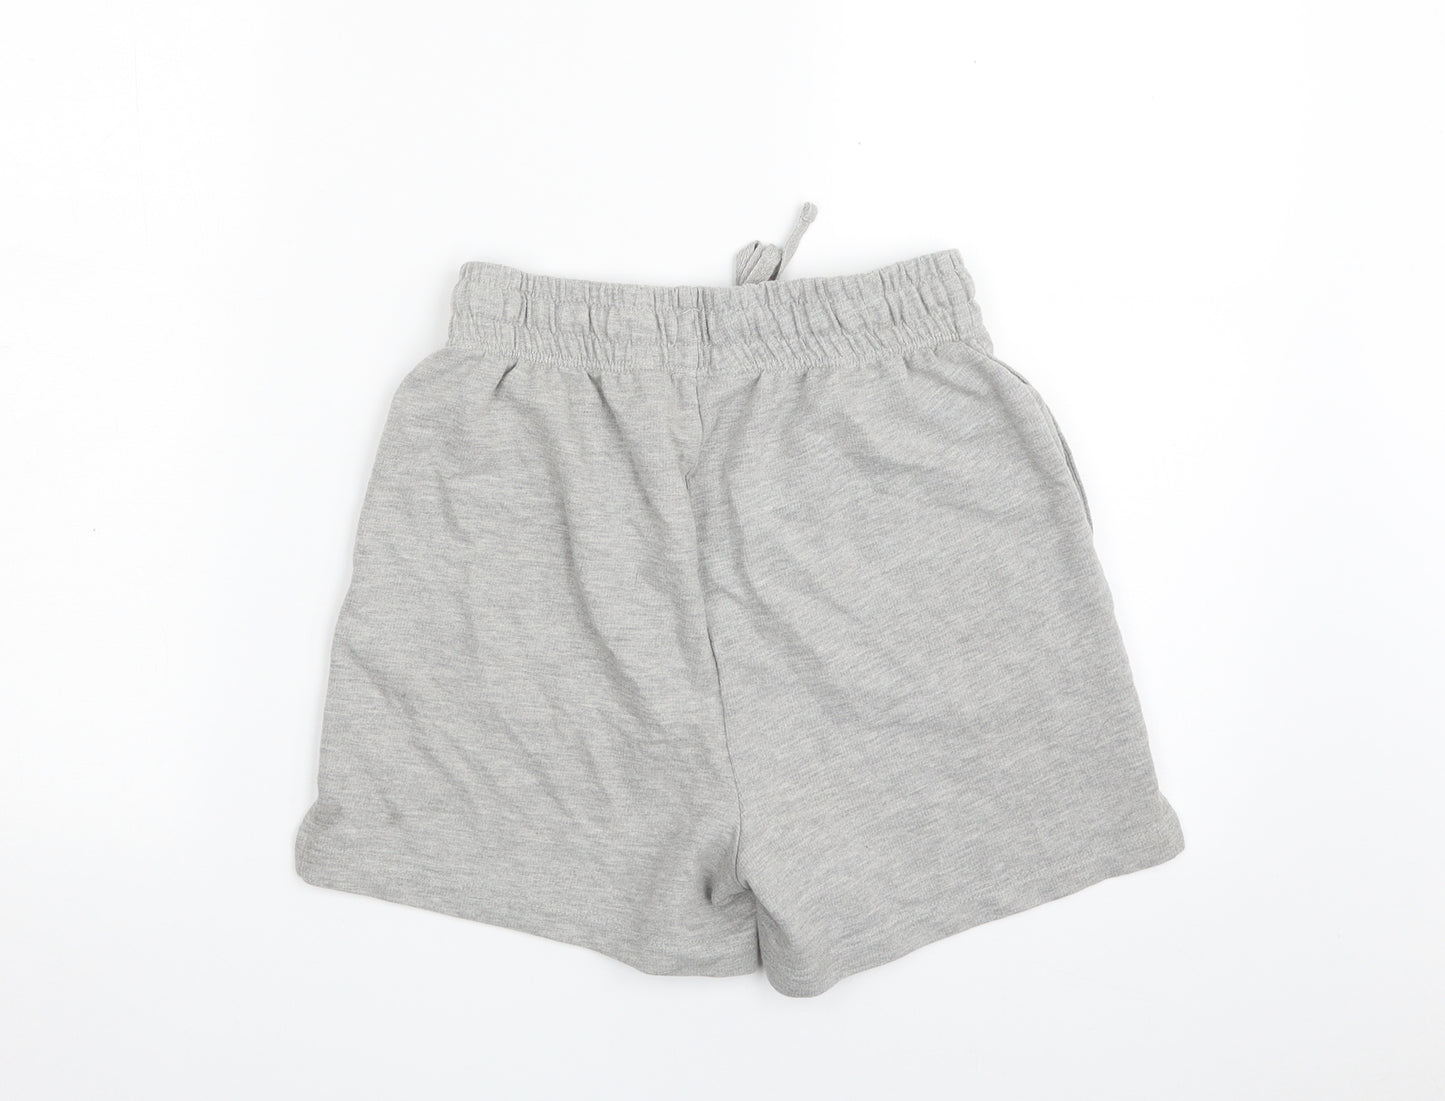 mrp Boys Grey  Cotton Sweat Shorts Size S  Regular  - Waist 24in